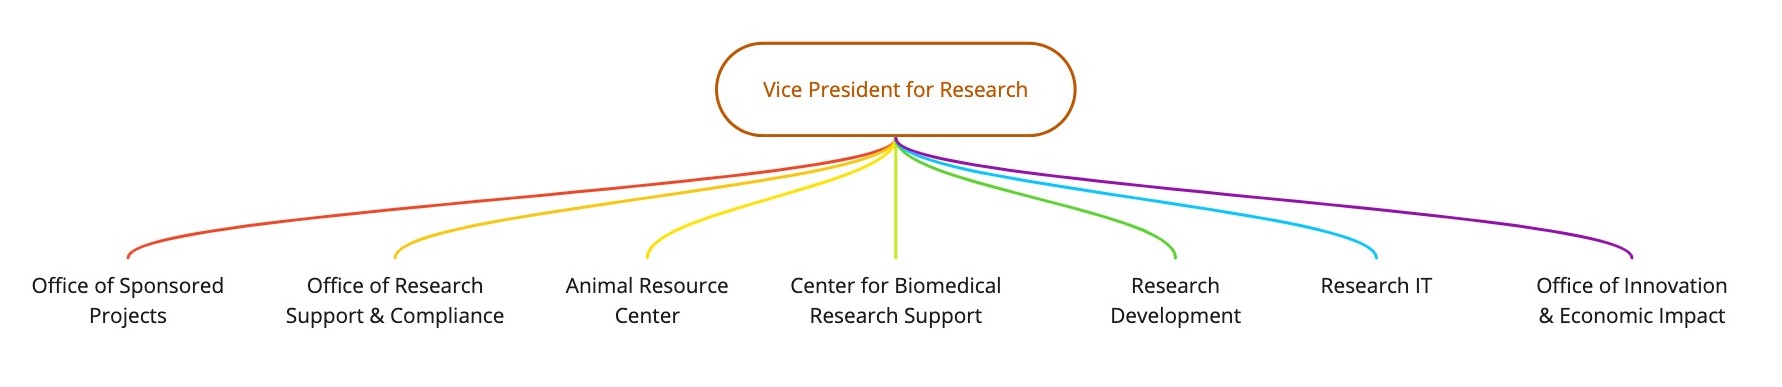 VPR org chart